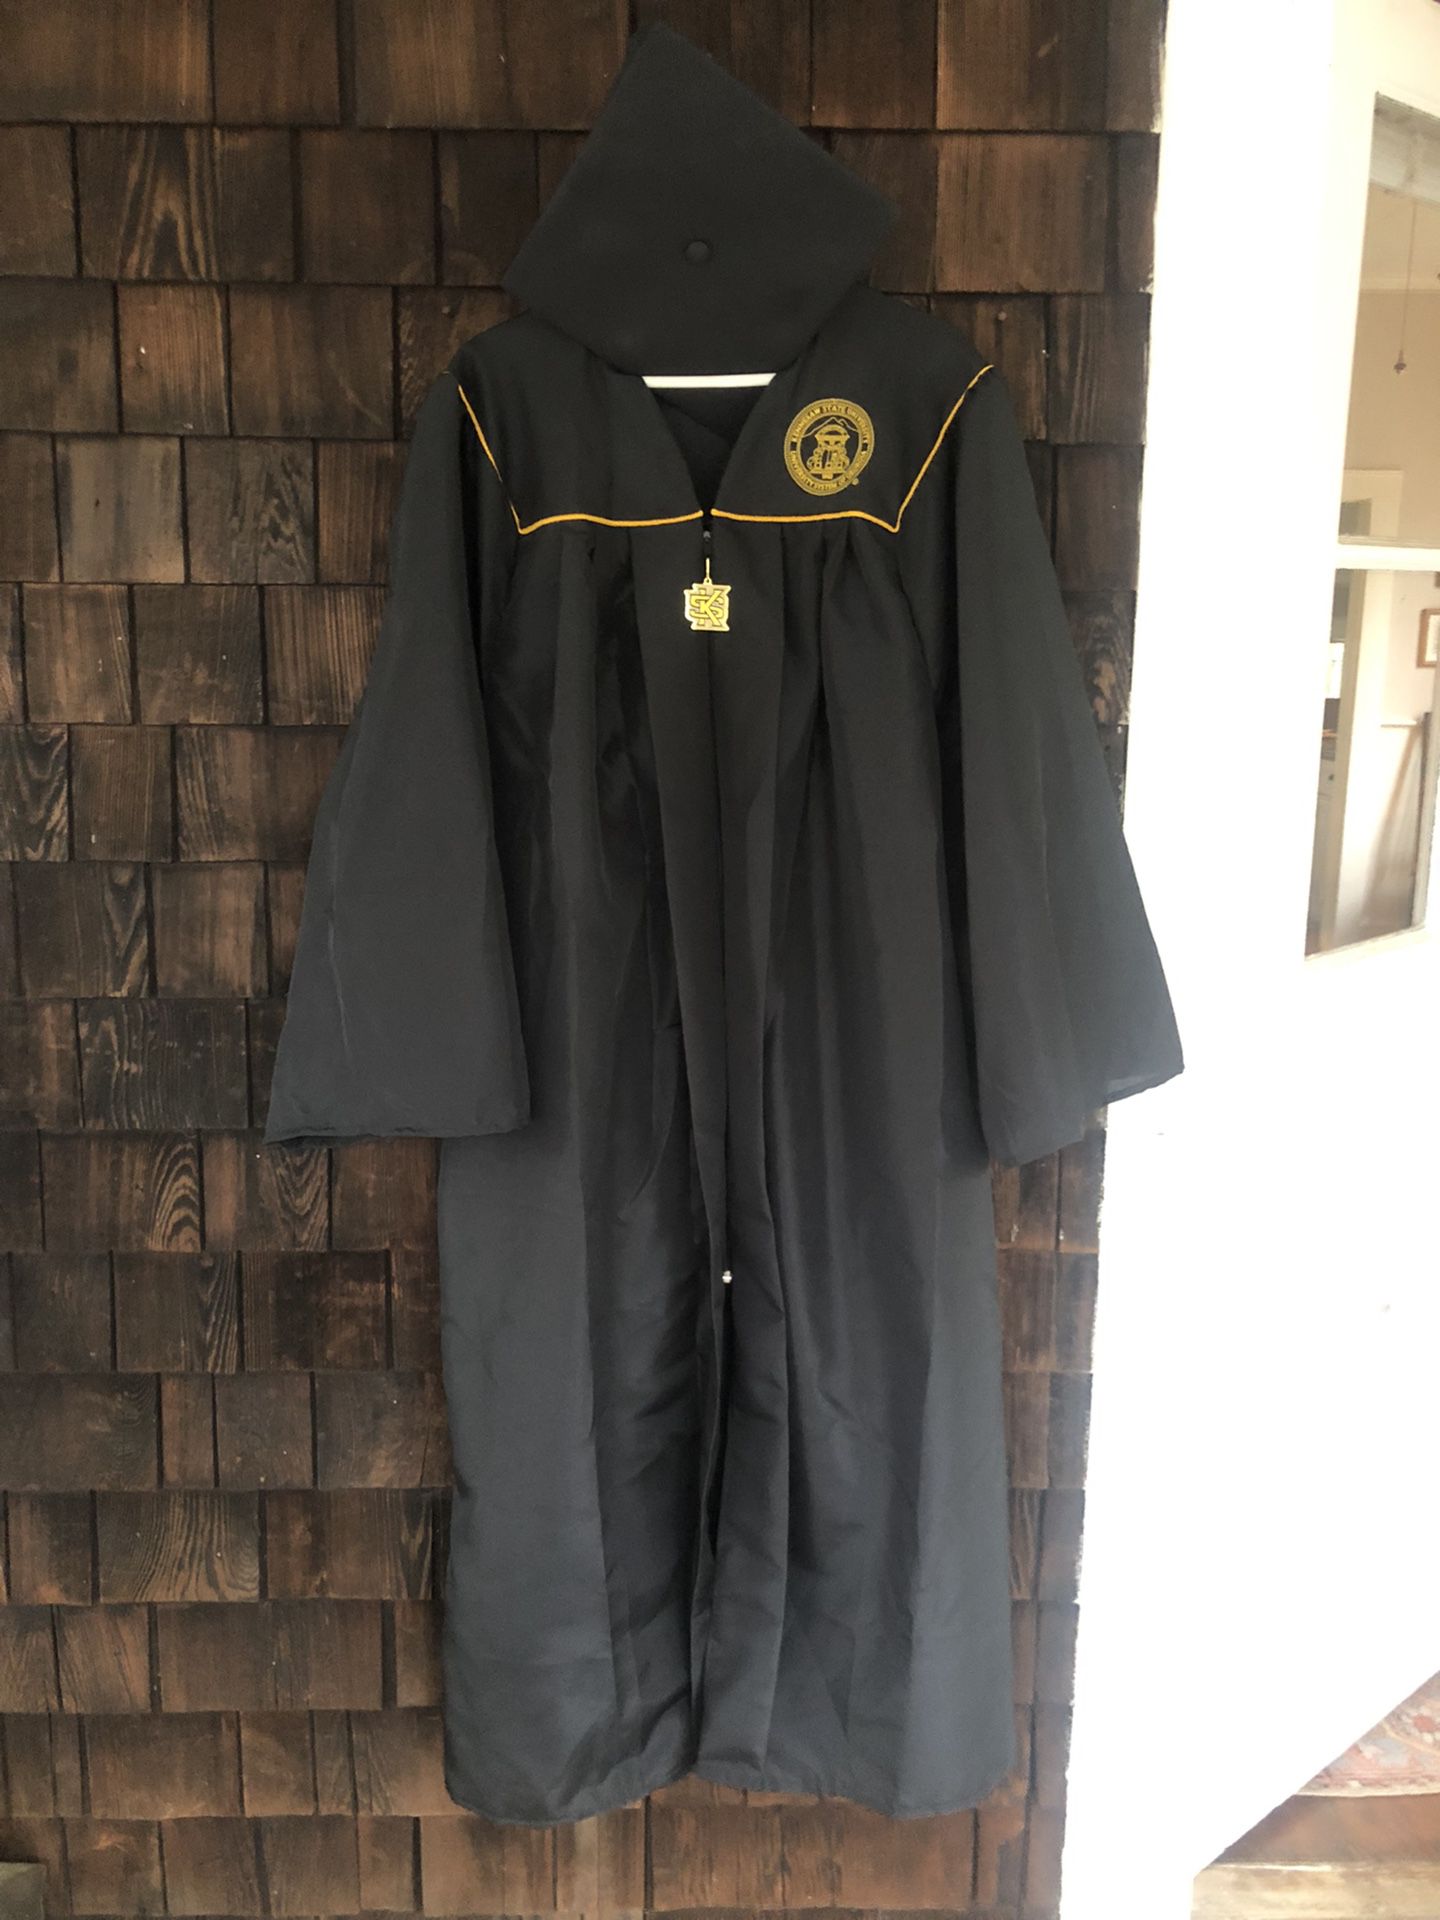 KSU Graduation Cap And Gown